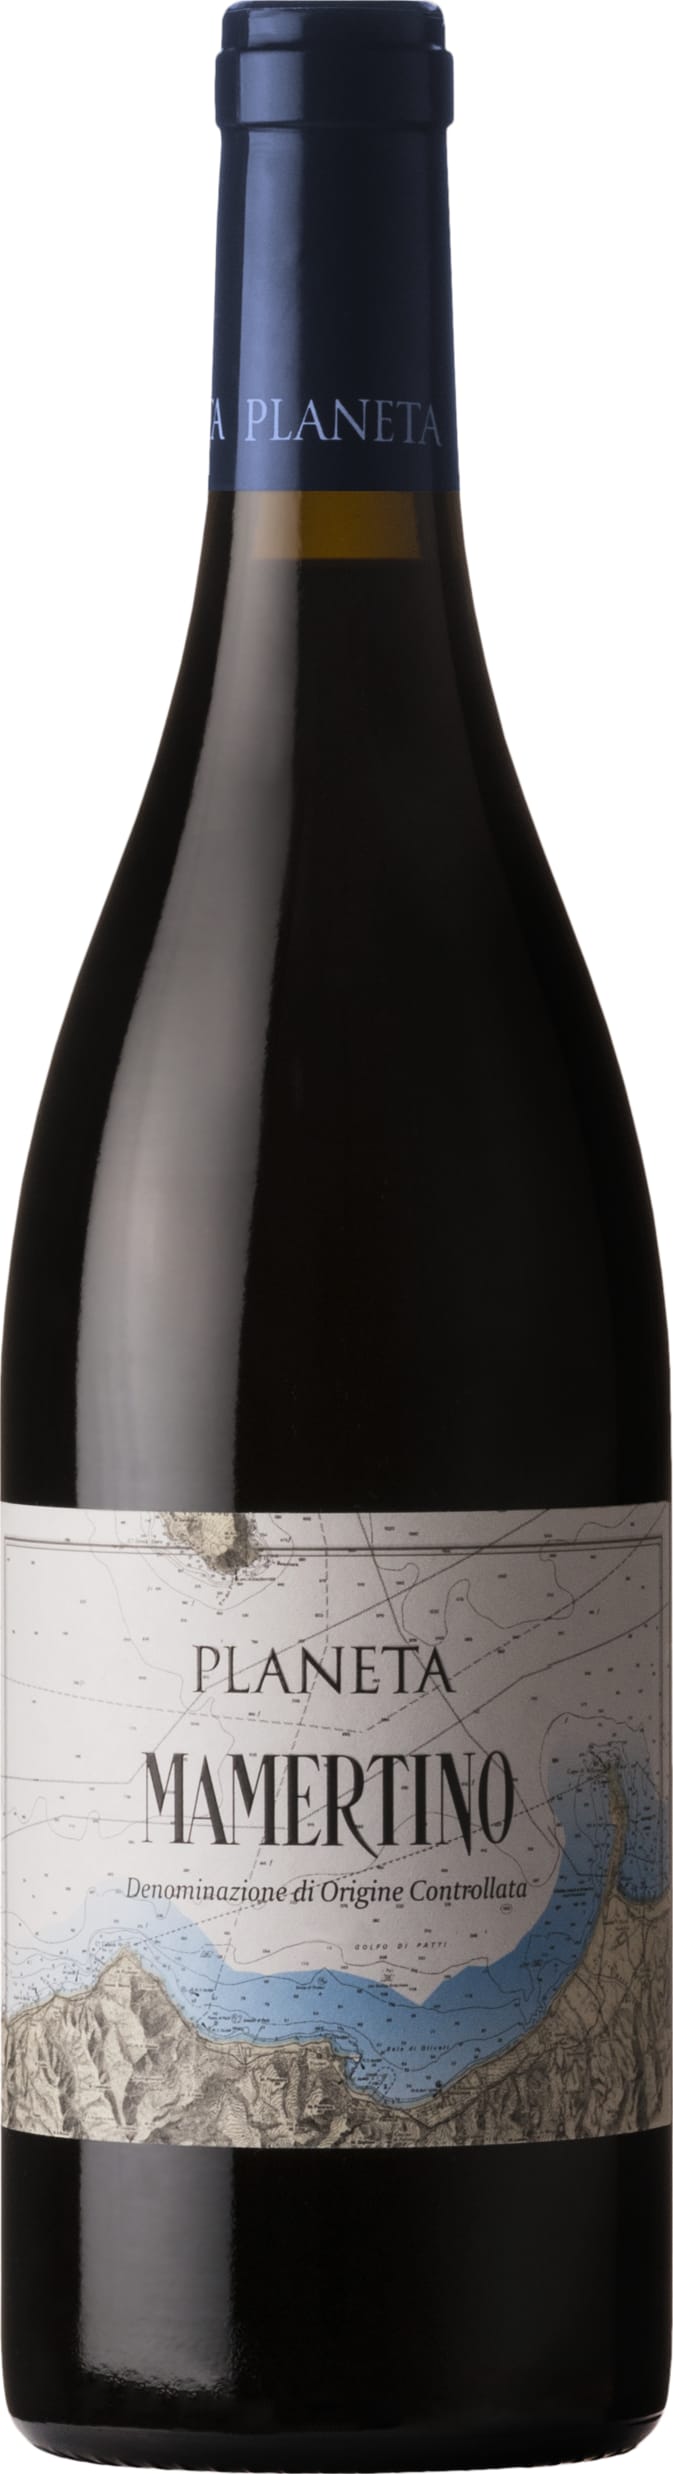 Planeta Mamertino DOC 2019 75cl - Buy Planeta Wines from GREAT WINES DIRECT wine shop